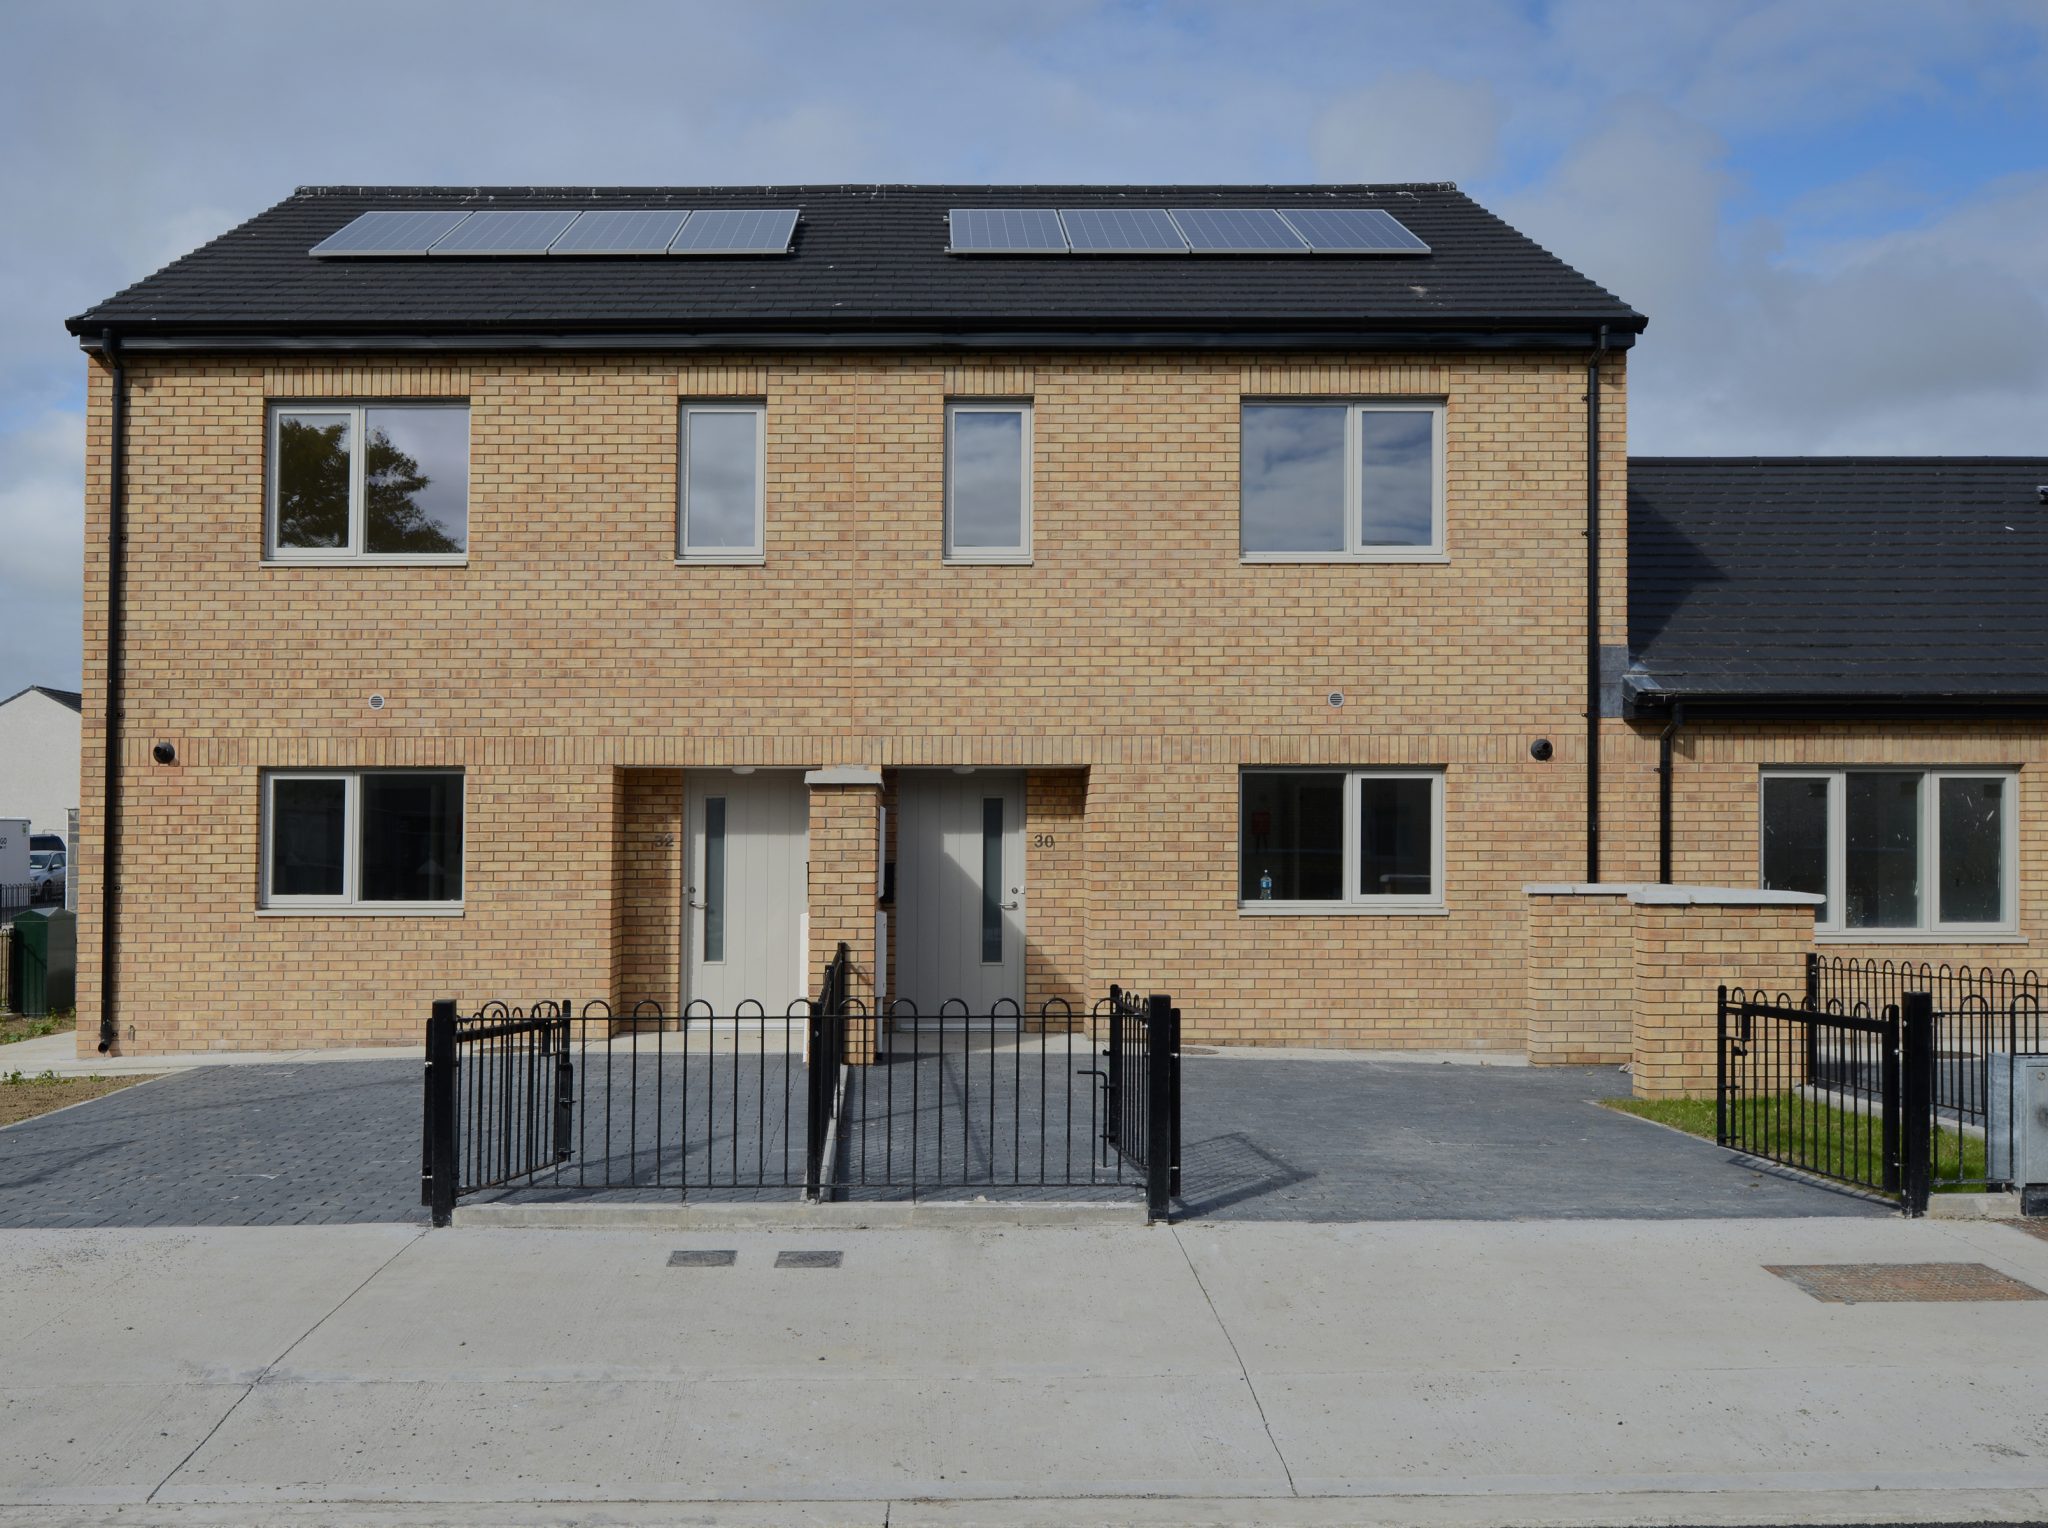 Rapid Housing Units, Cherry Orchard, Dublin 10 for Dublin City Council gallery